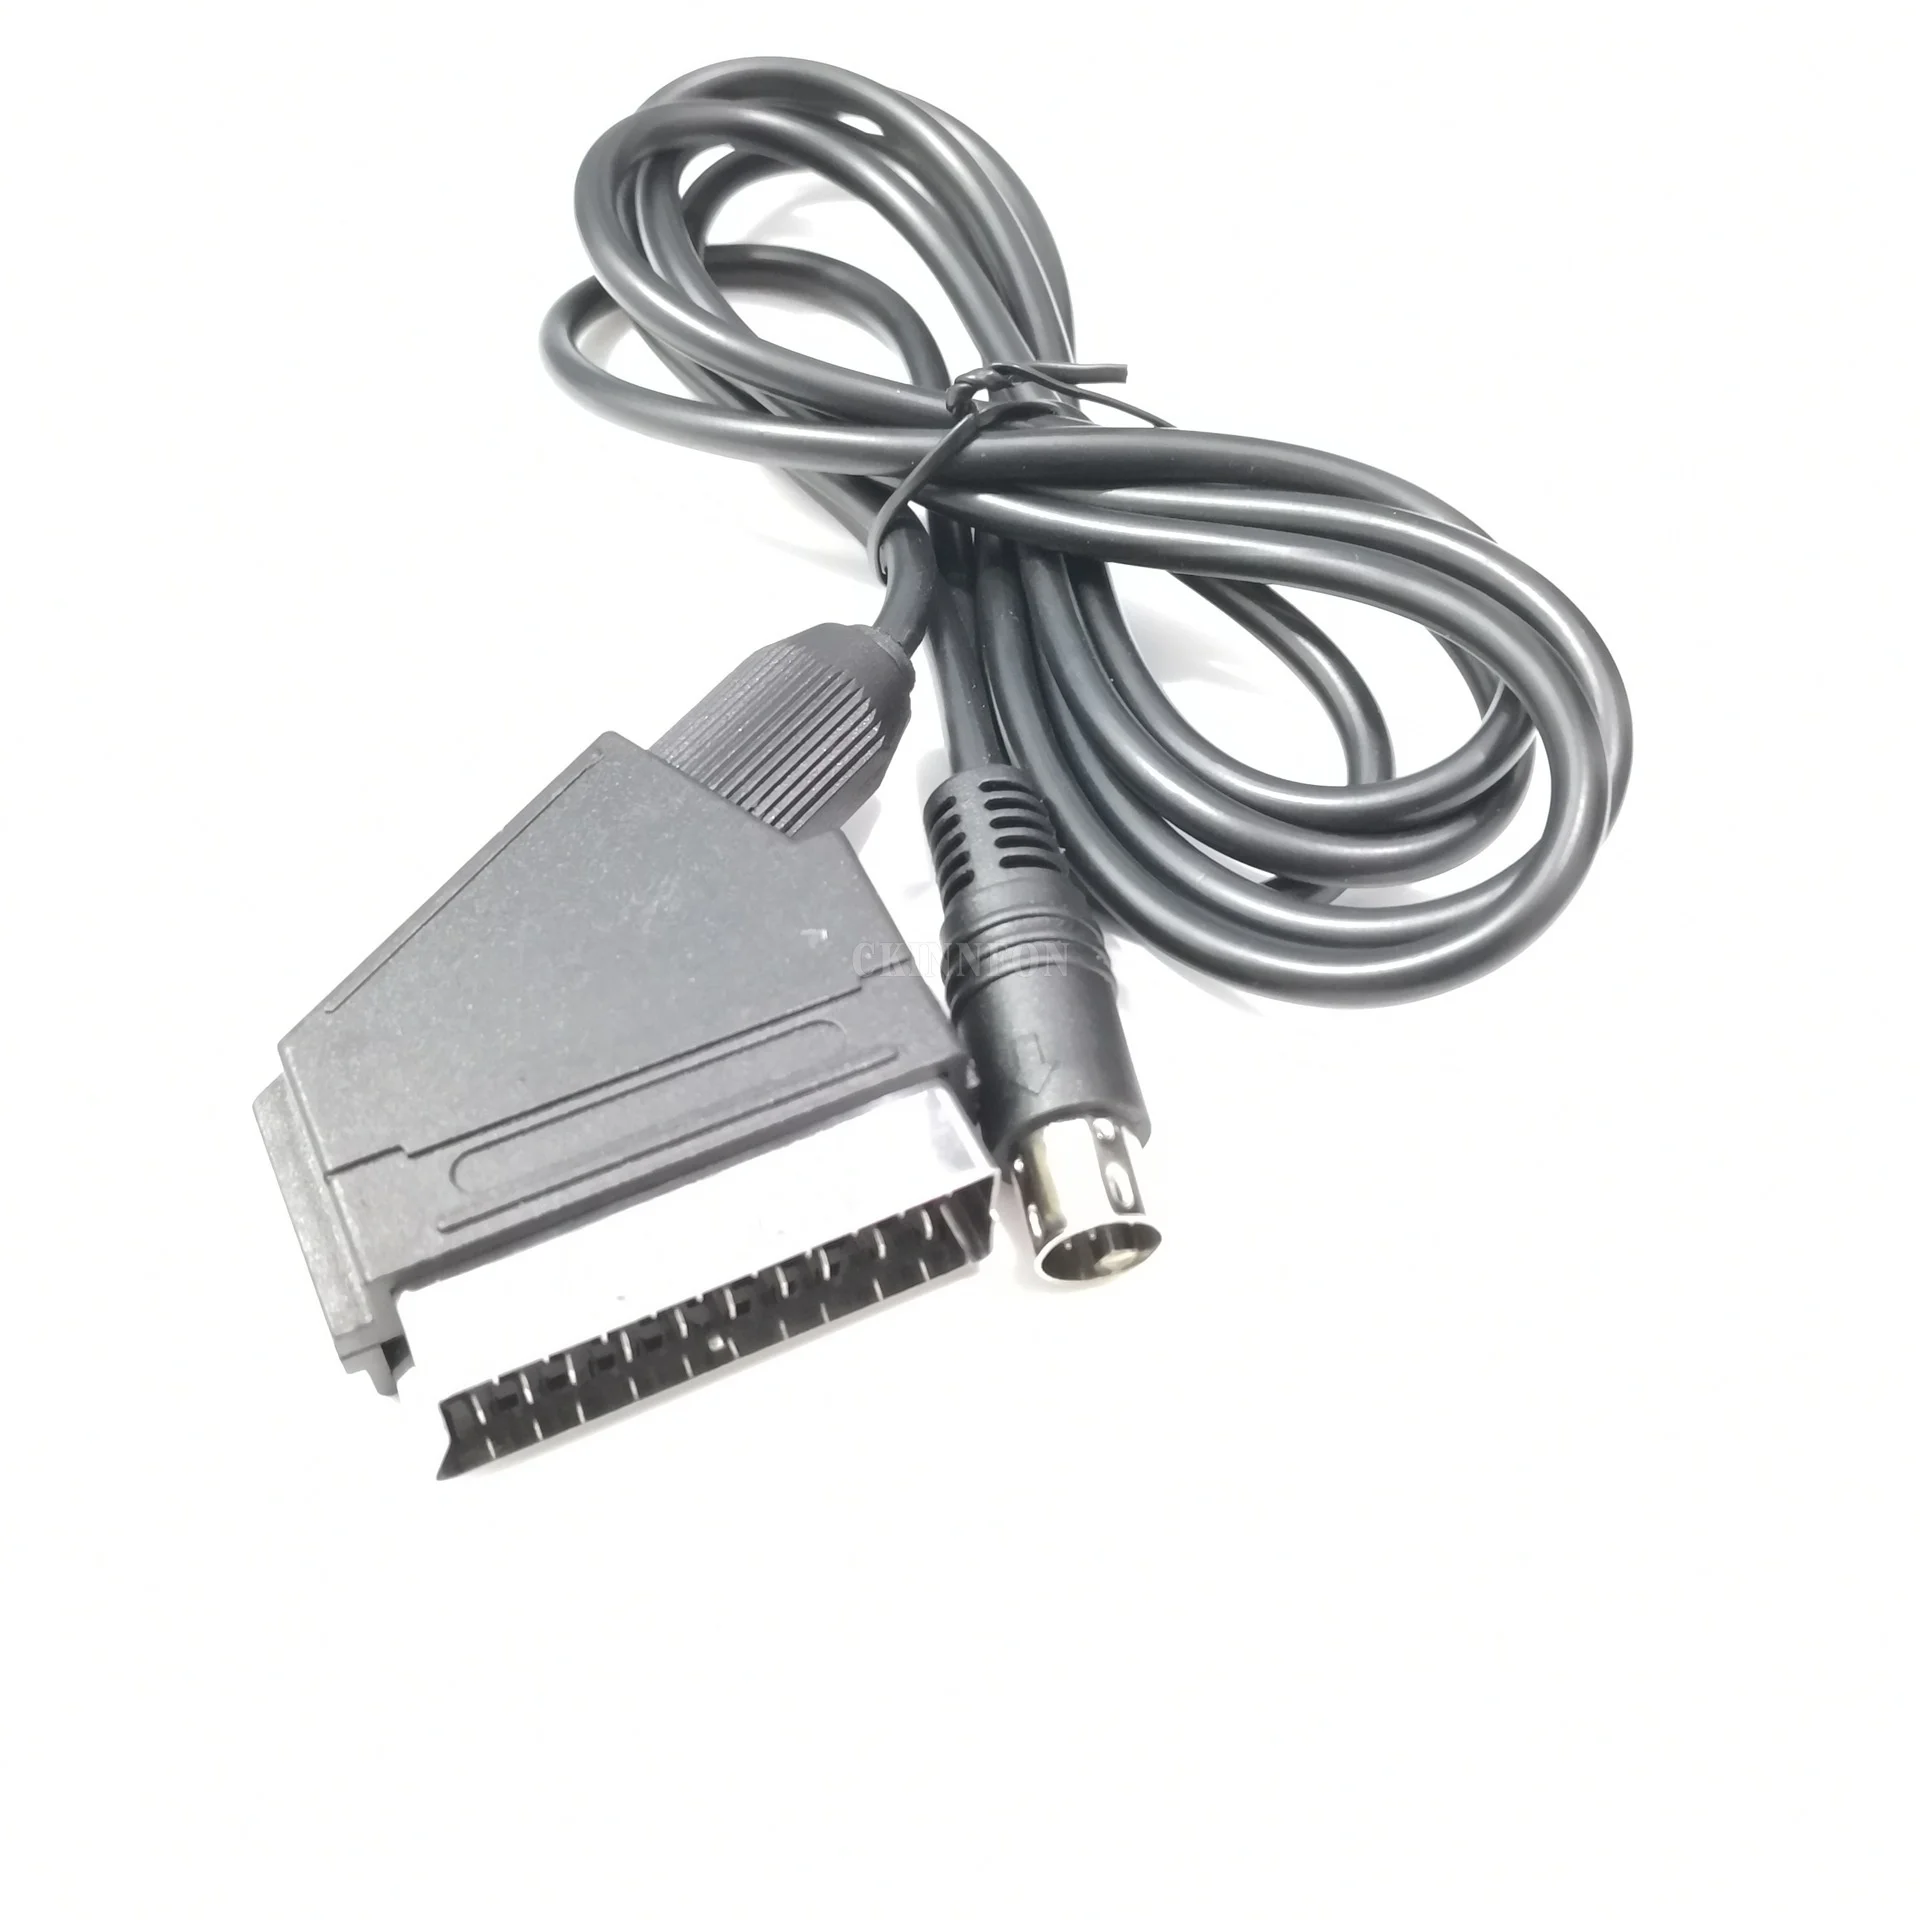 

10Pcs AV TV Video Cable Lead Scart Cable For SEGA For Mega Drive MD 2 For Genesis 2 NTSC & PAL Version